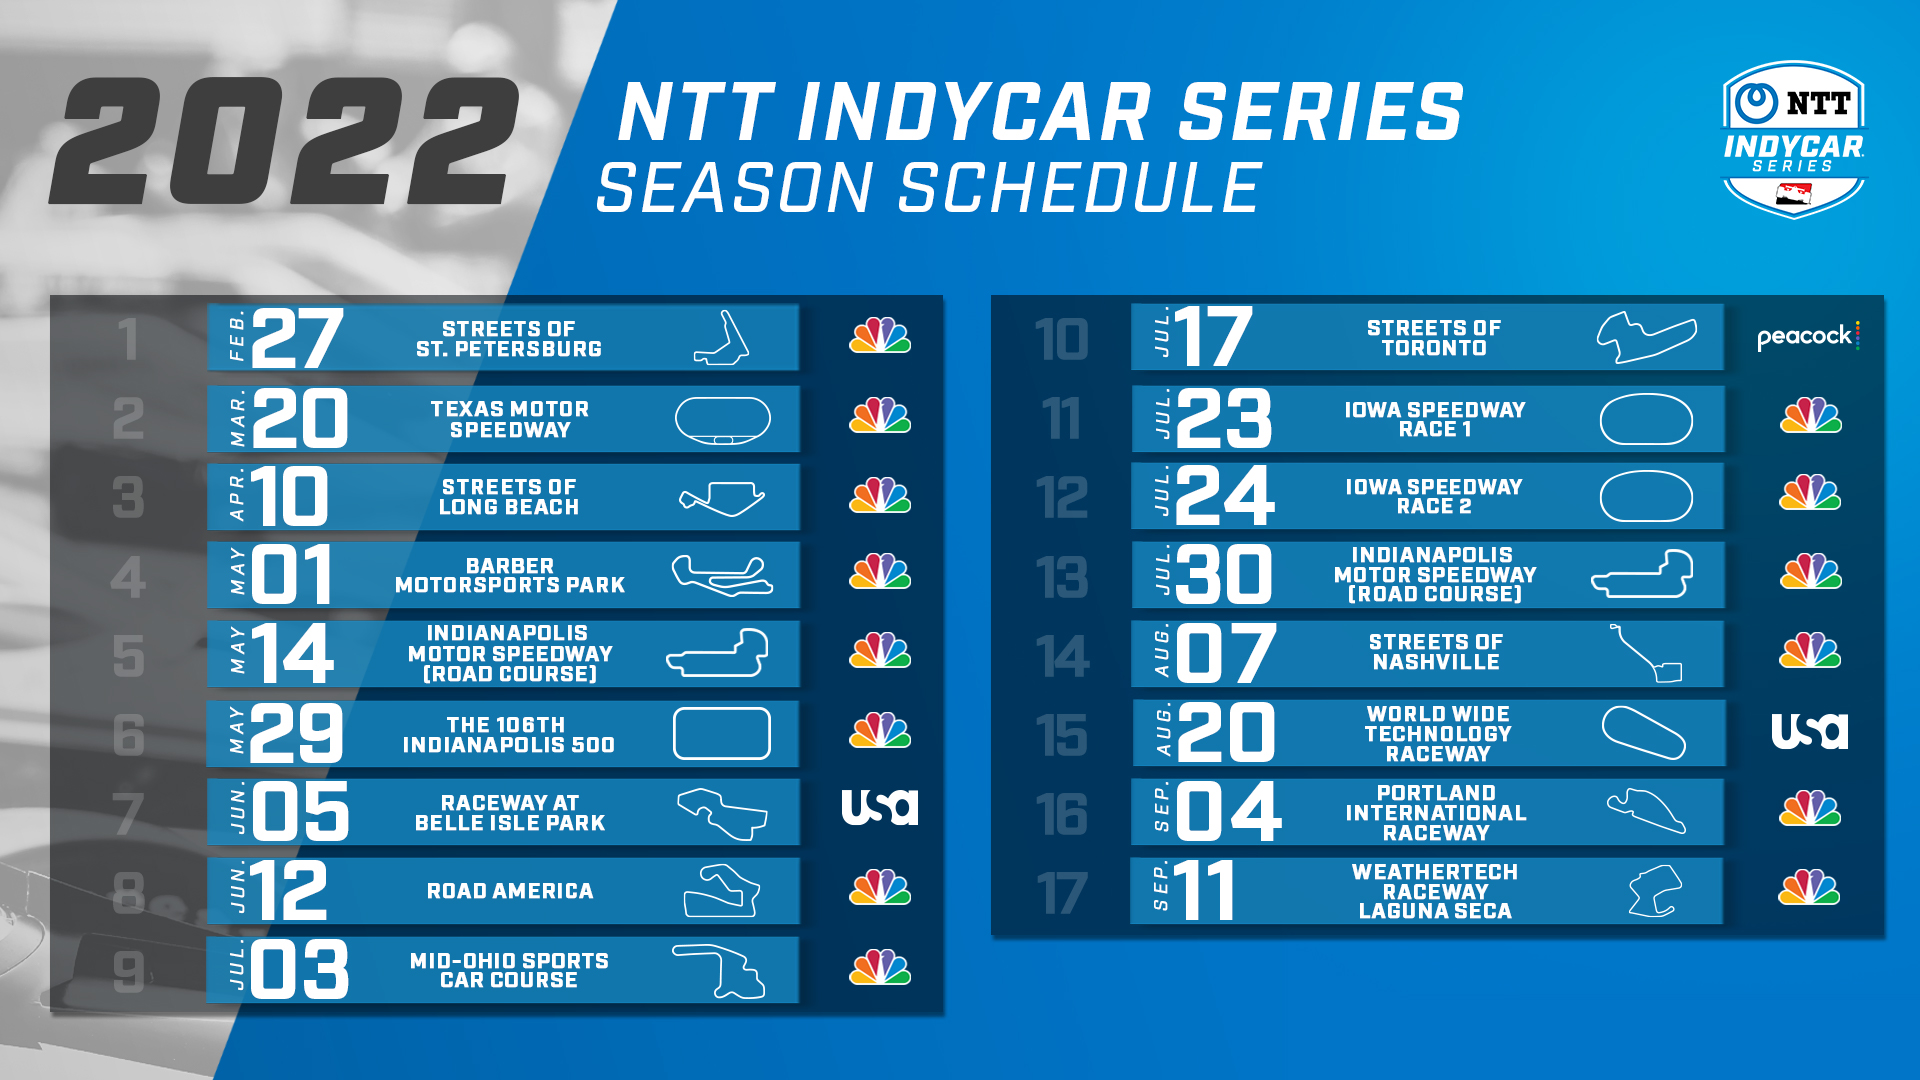 Indy 500 Schedule 2022 2022 Formula 1 & Other Motorsport Calendars | Grand Prix 247